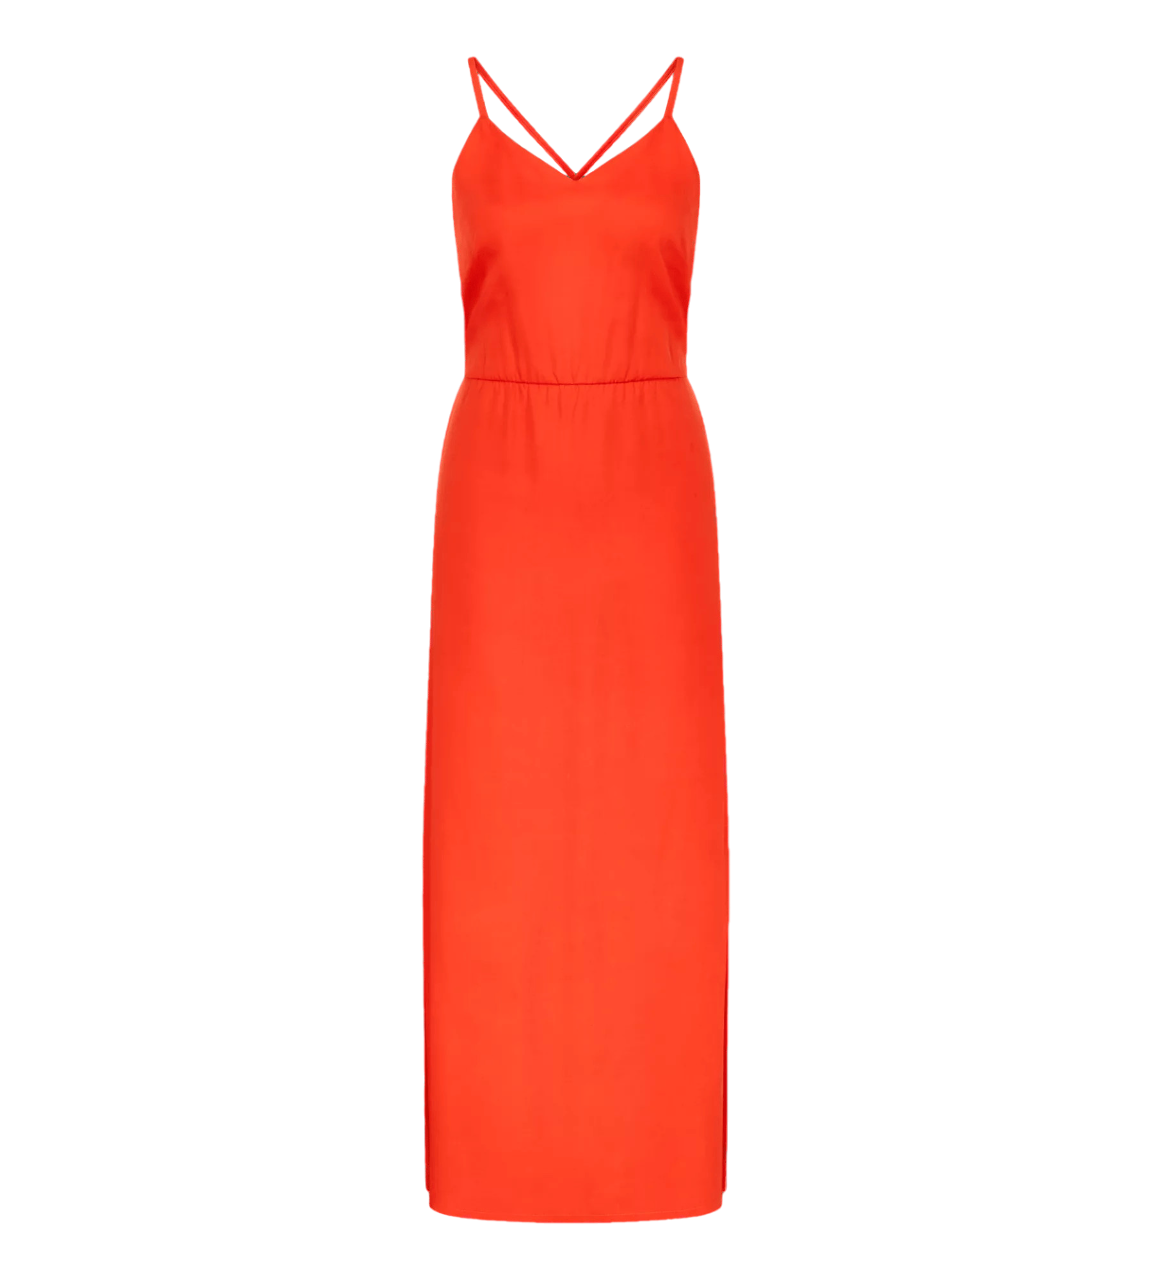 Dámské plážové šaty Beach MyWear Maxi Dress 01 sd - RED - červené 6714 - TRIUMPH RED 38